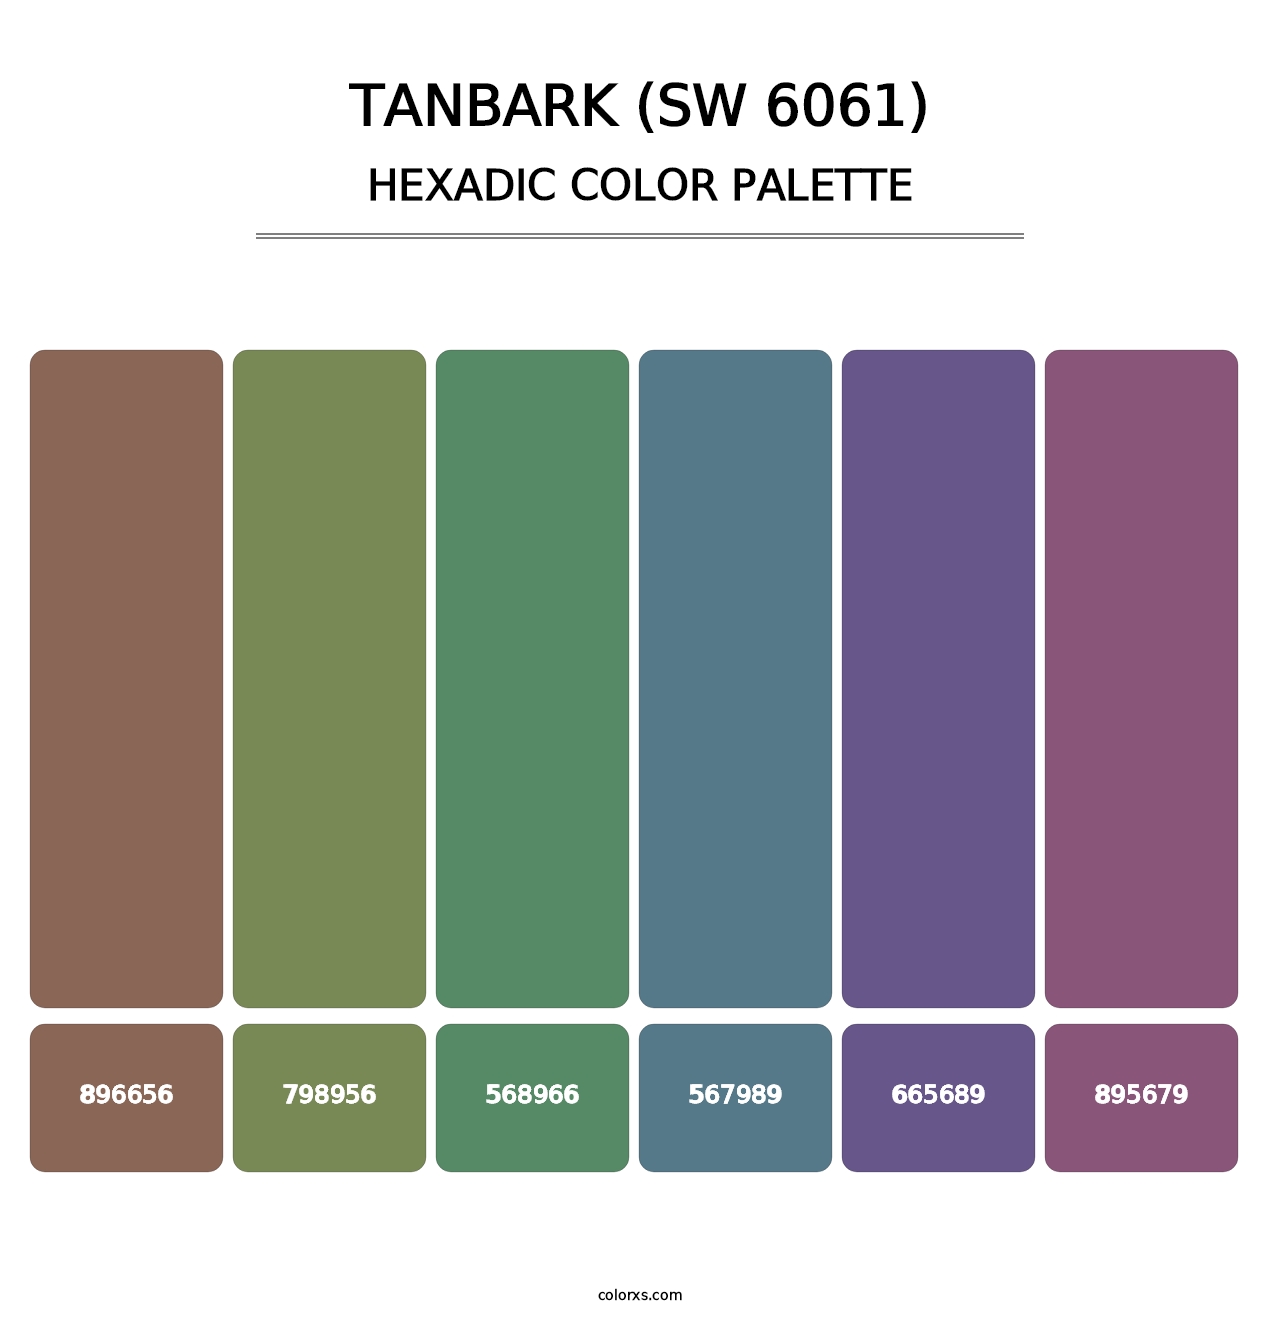 Tanbark (SW 6061) - Hexadic Color Palette